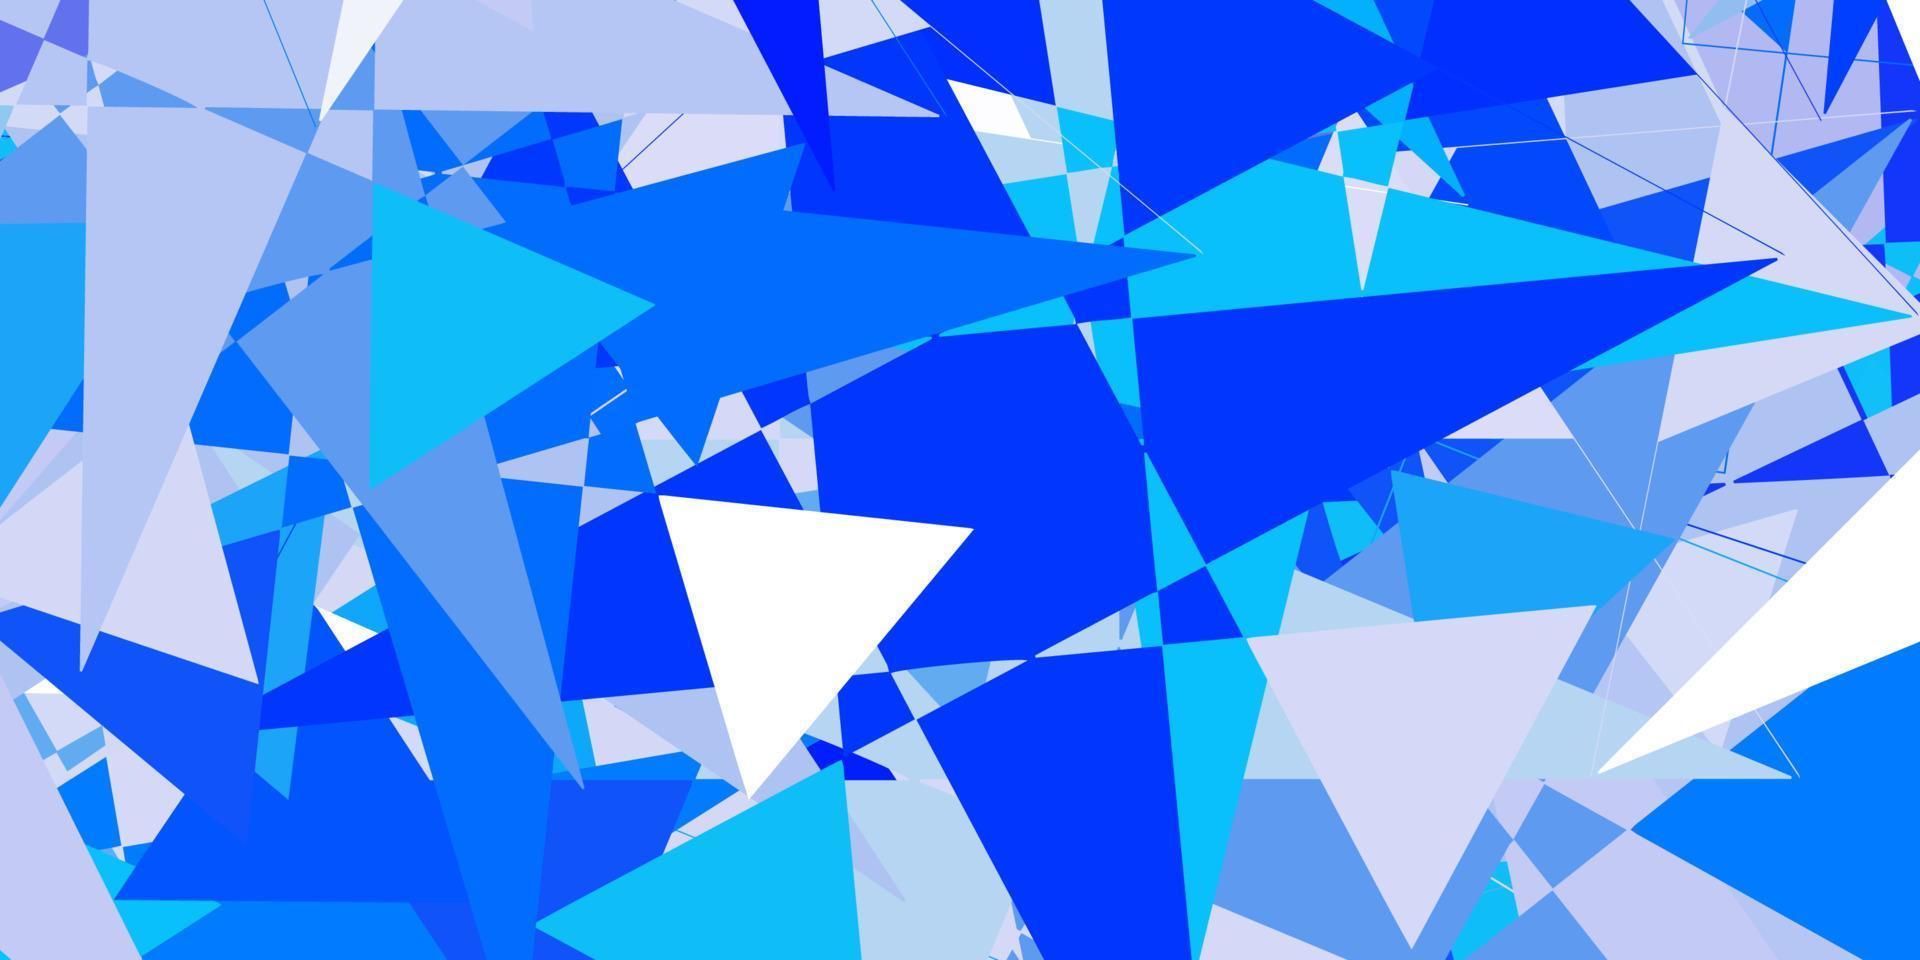 layout de vetor de azul claro com formas de triângulo.